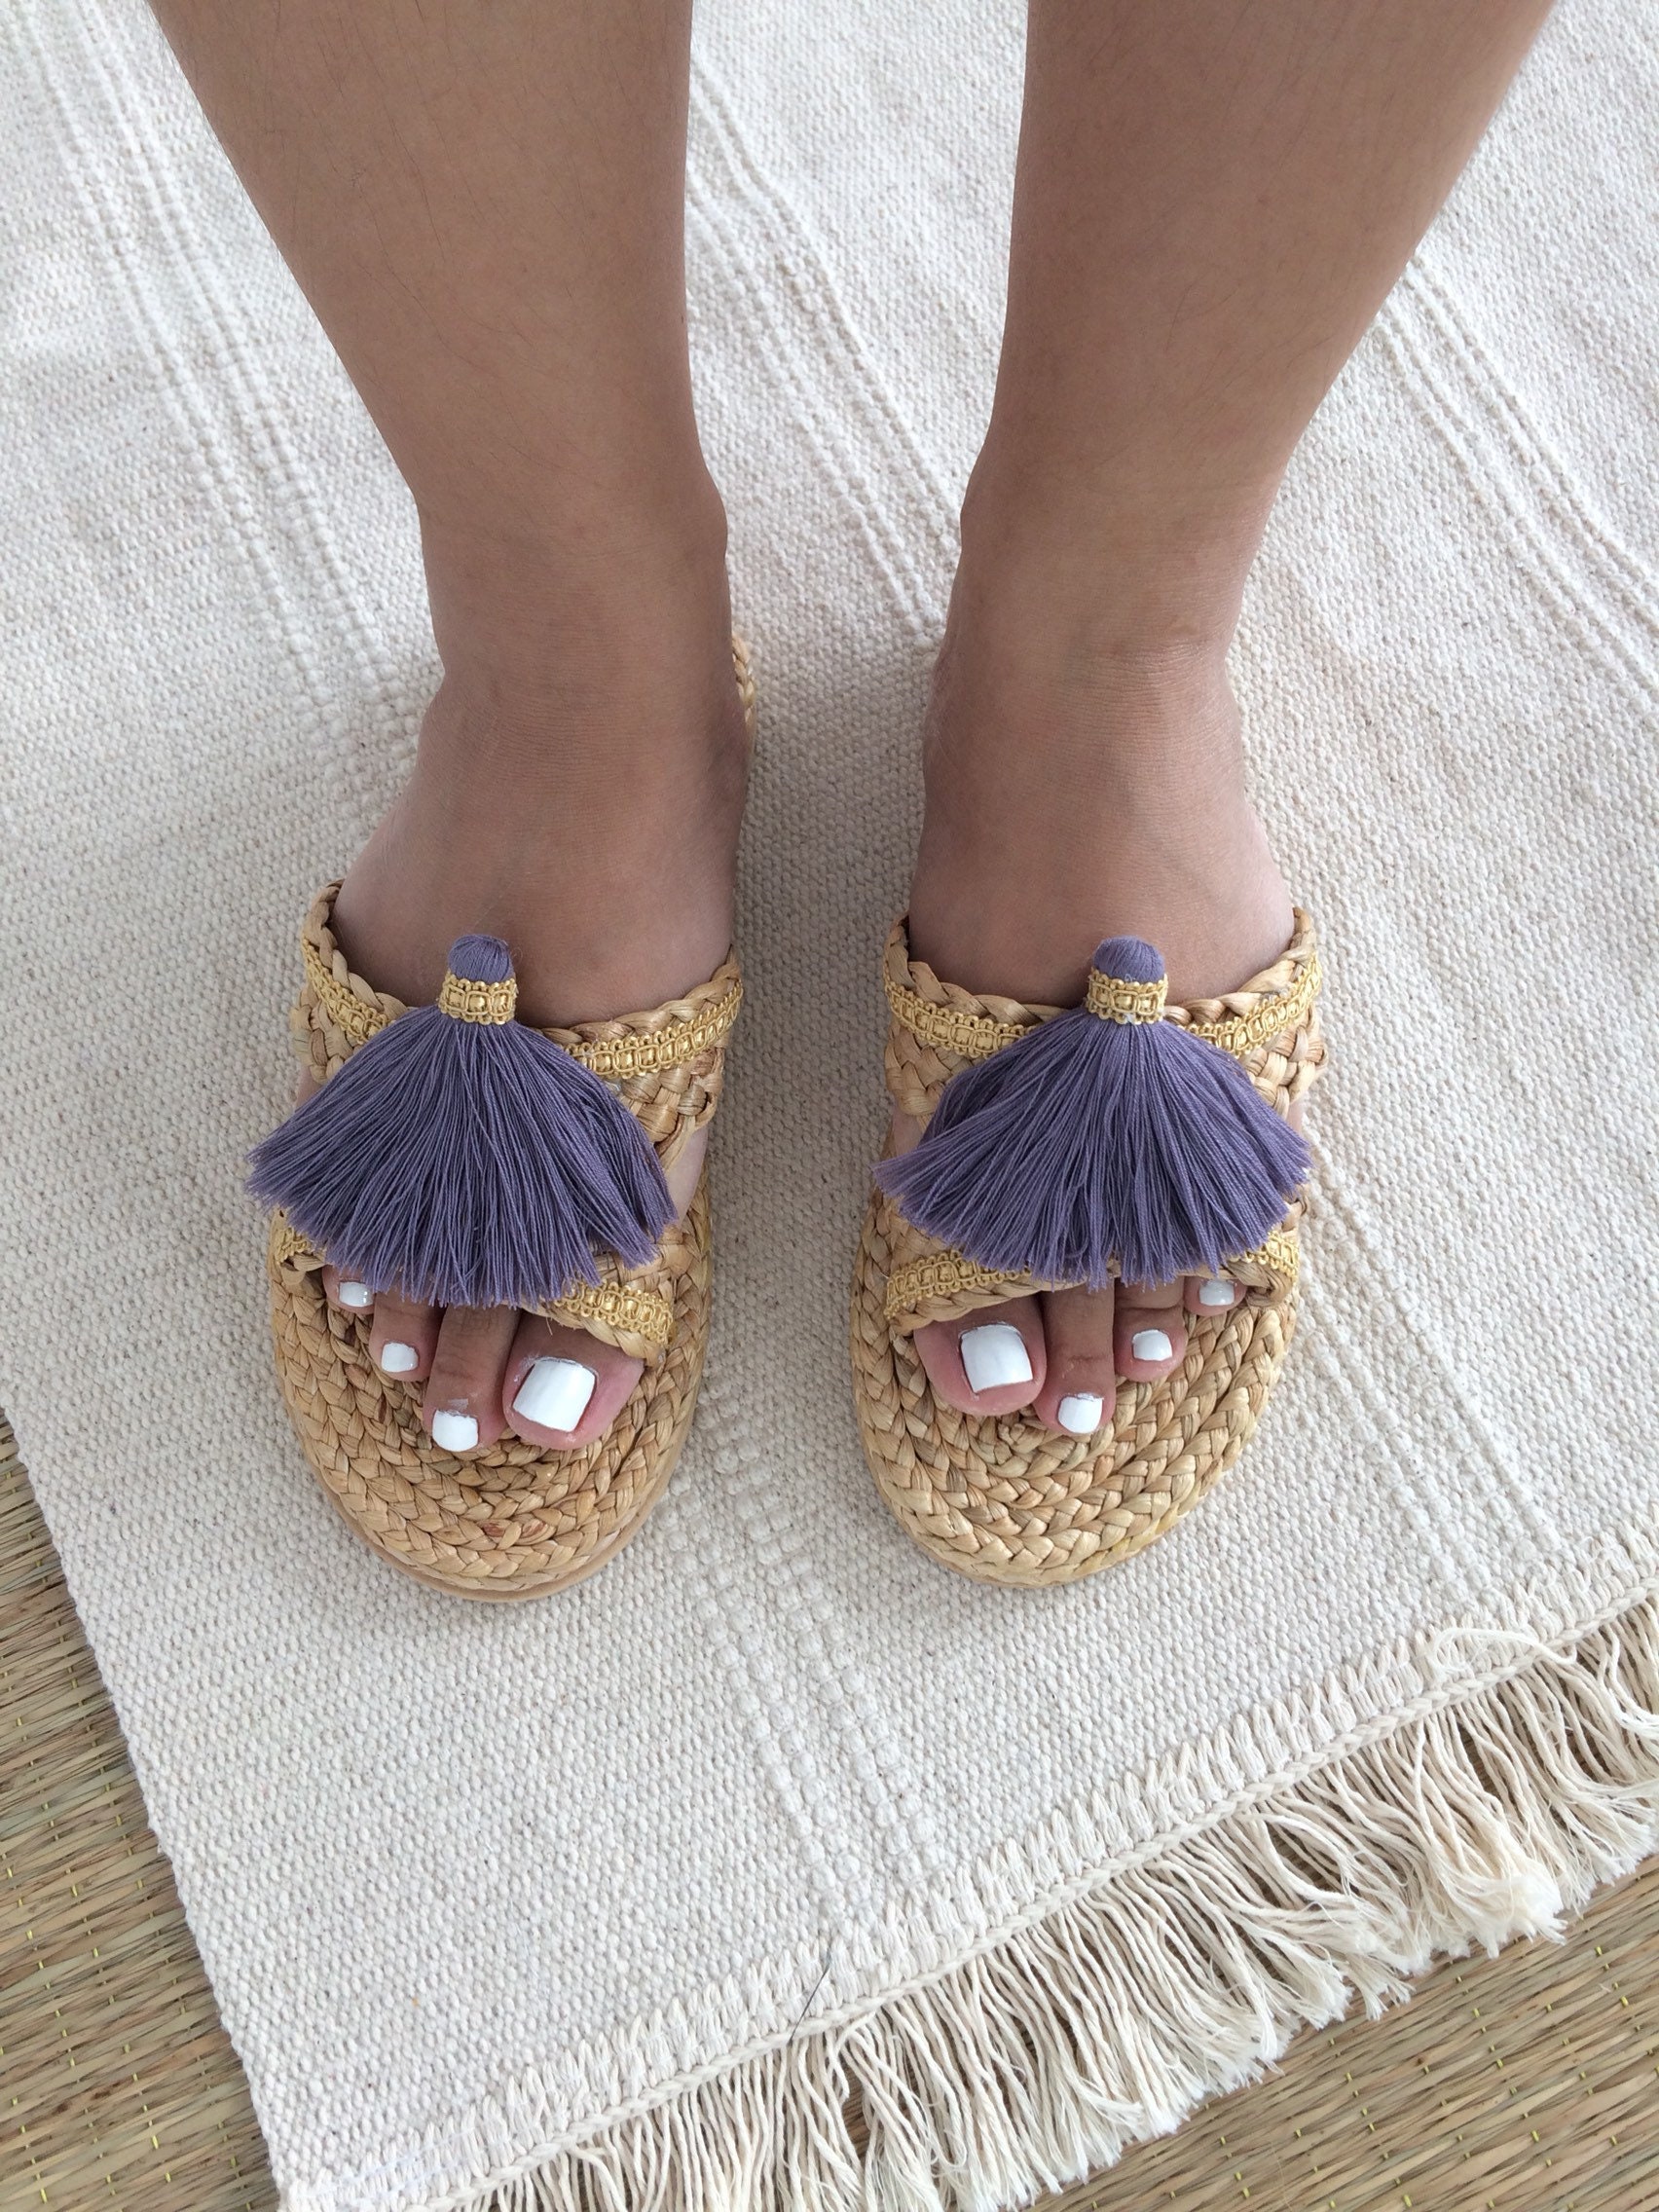 Tassel Relaxing Sandals / Greek Sandals / Beach Sandals / Pom | Etsy